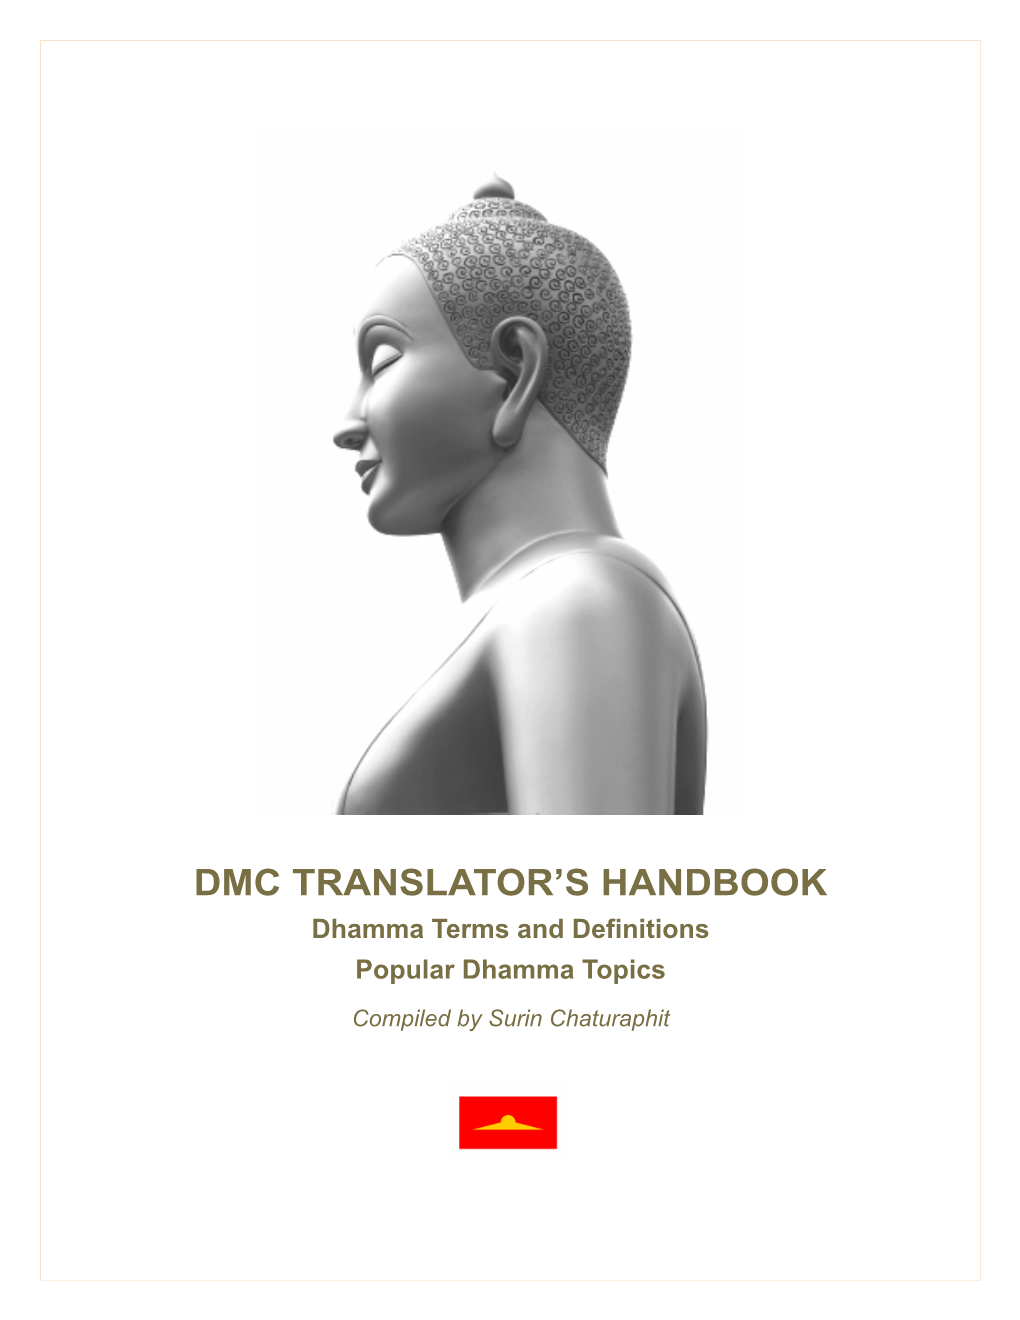 Dmc Translator's Handbook